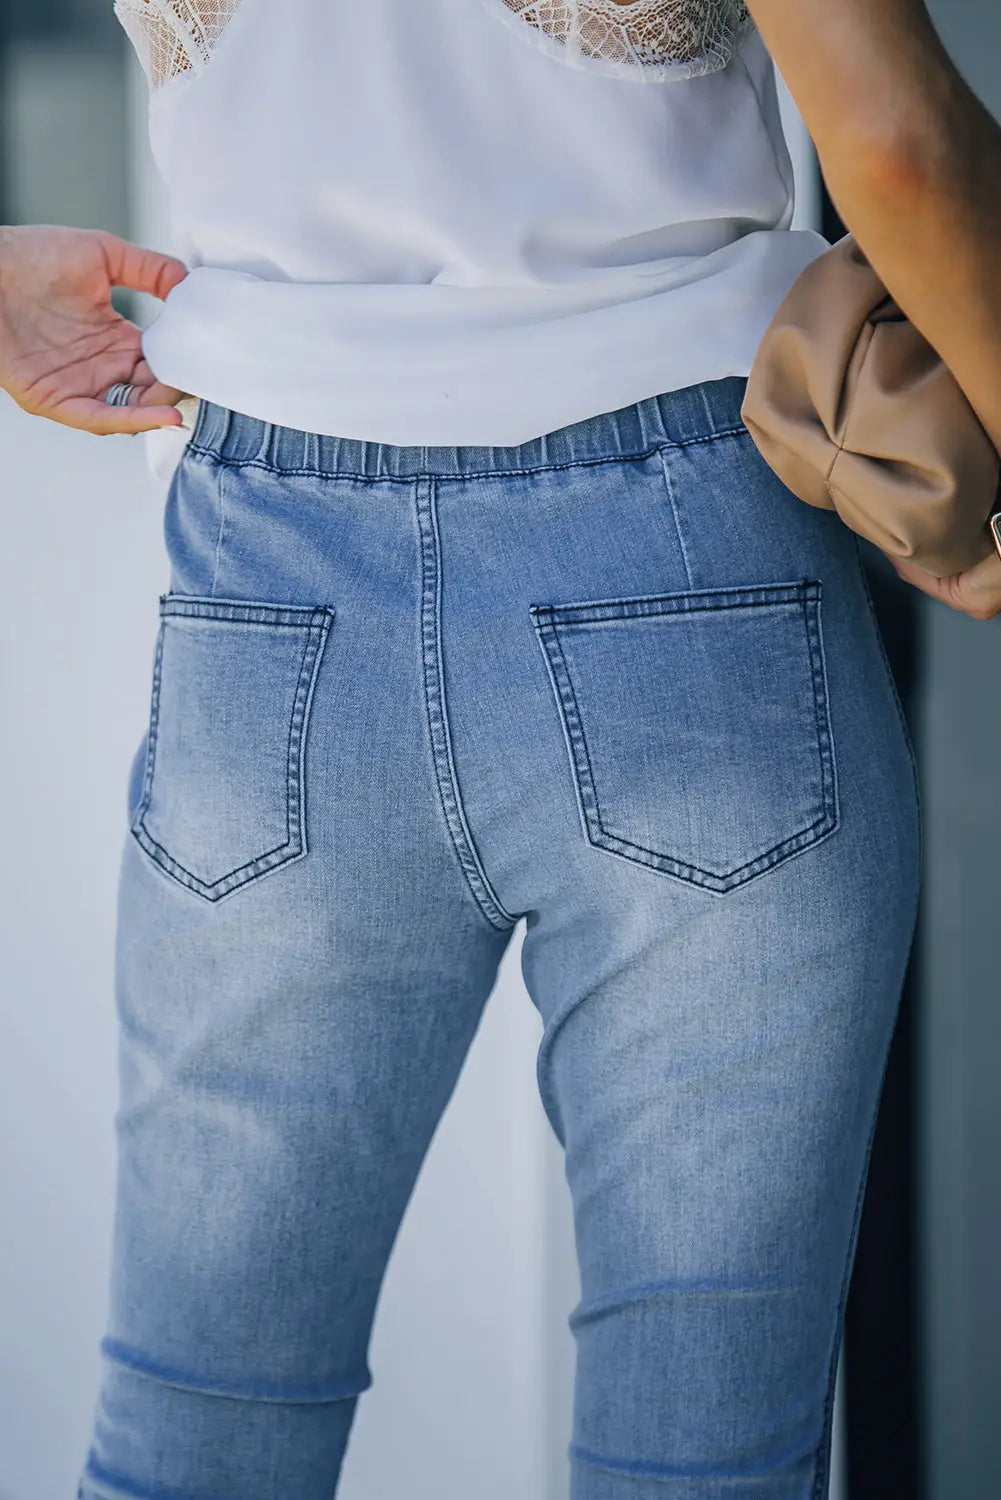 Black distressed bell bottom denim pants - jeans